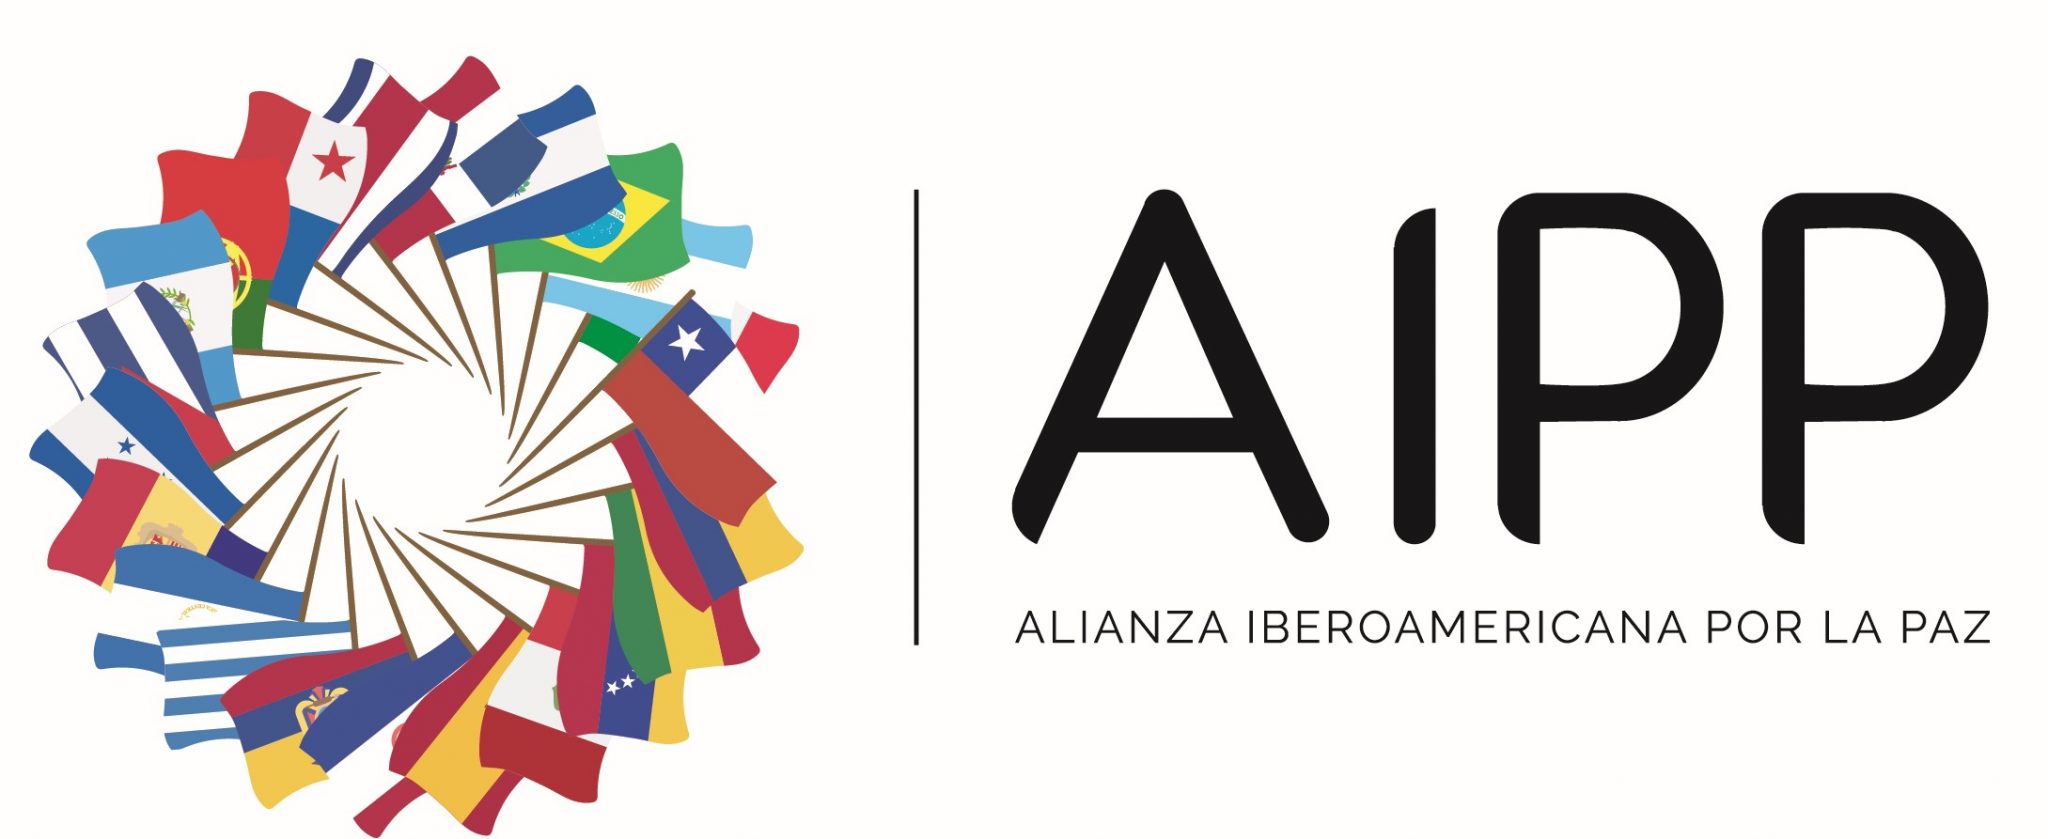 ALIANZA IBEROAMERICANA POR LA PAZ » Alianza Iberoamericana por la Paz